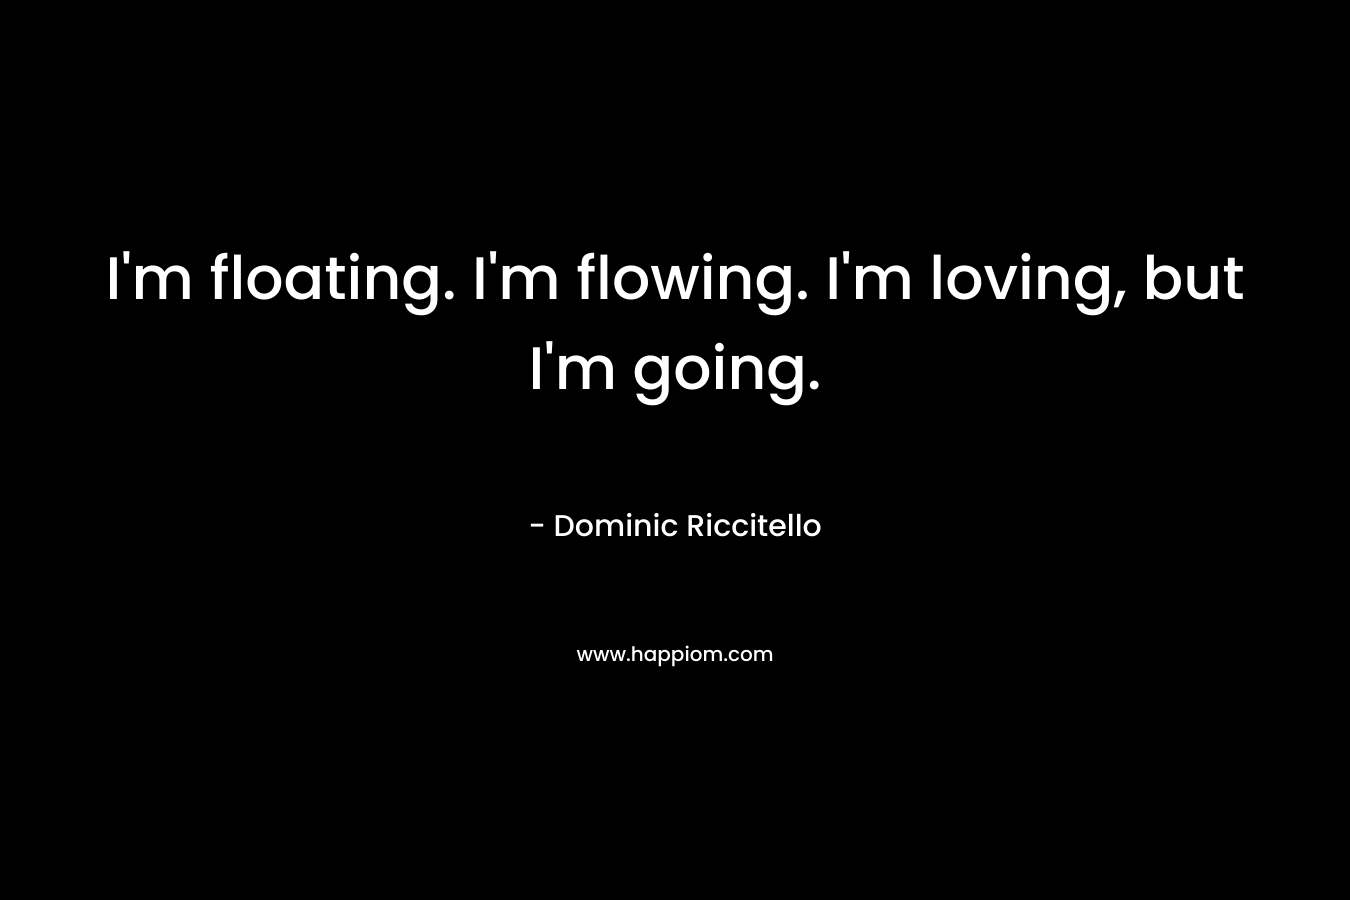 I'm floating. I'm flowing. I'm loving, but I'm going.